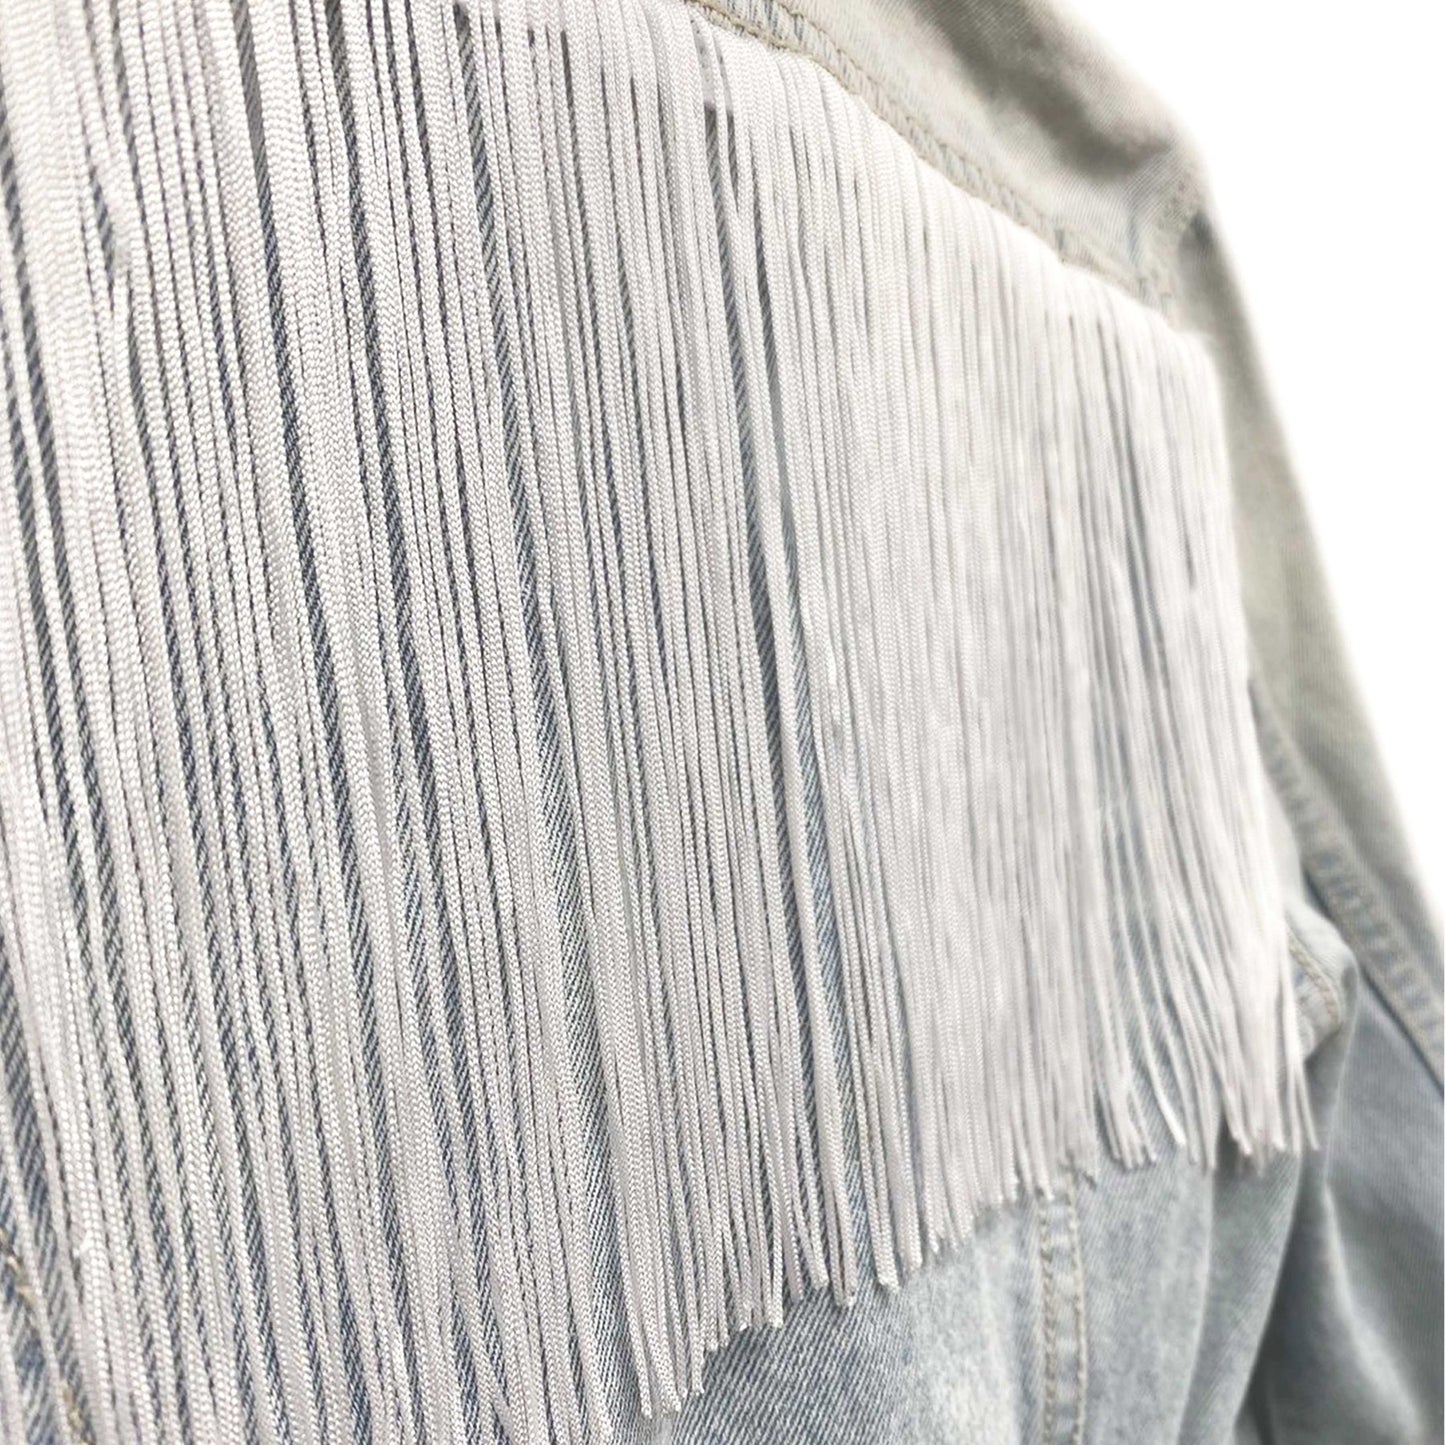 Upcycled Vintage Denim Jacket With Fringe Detail